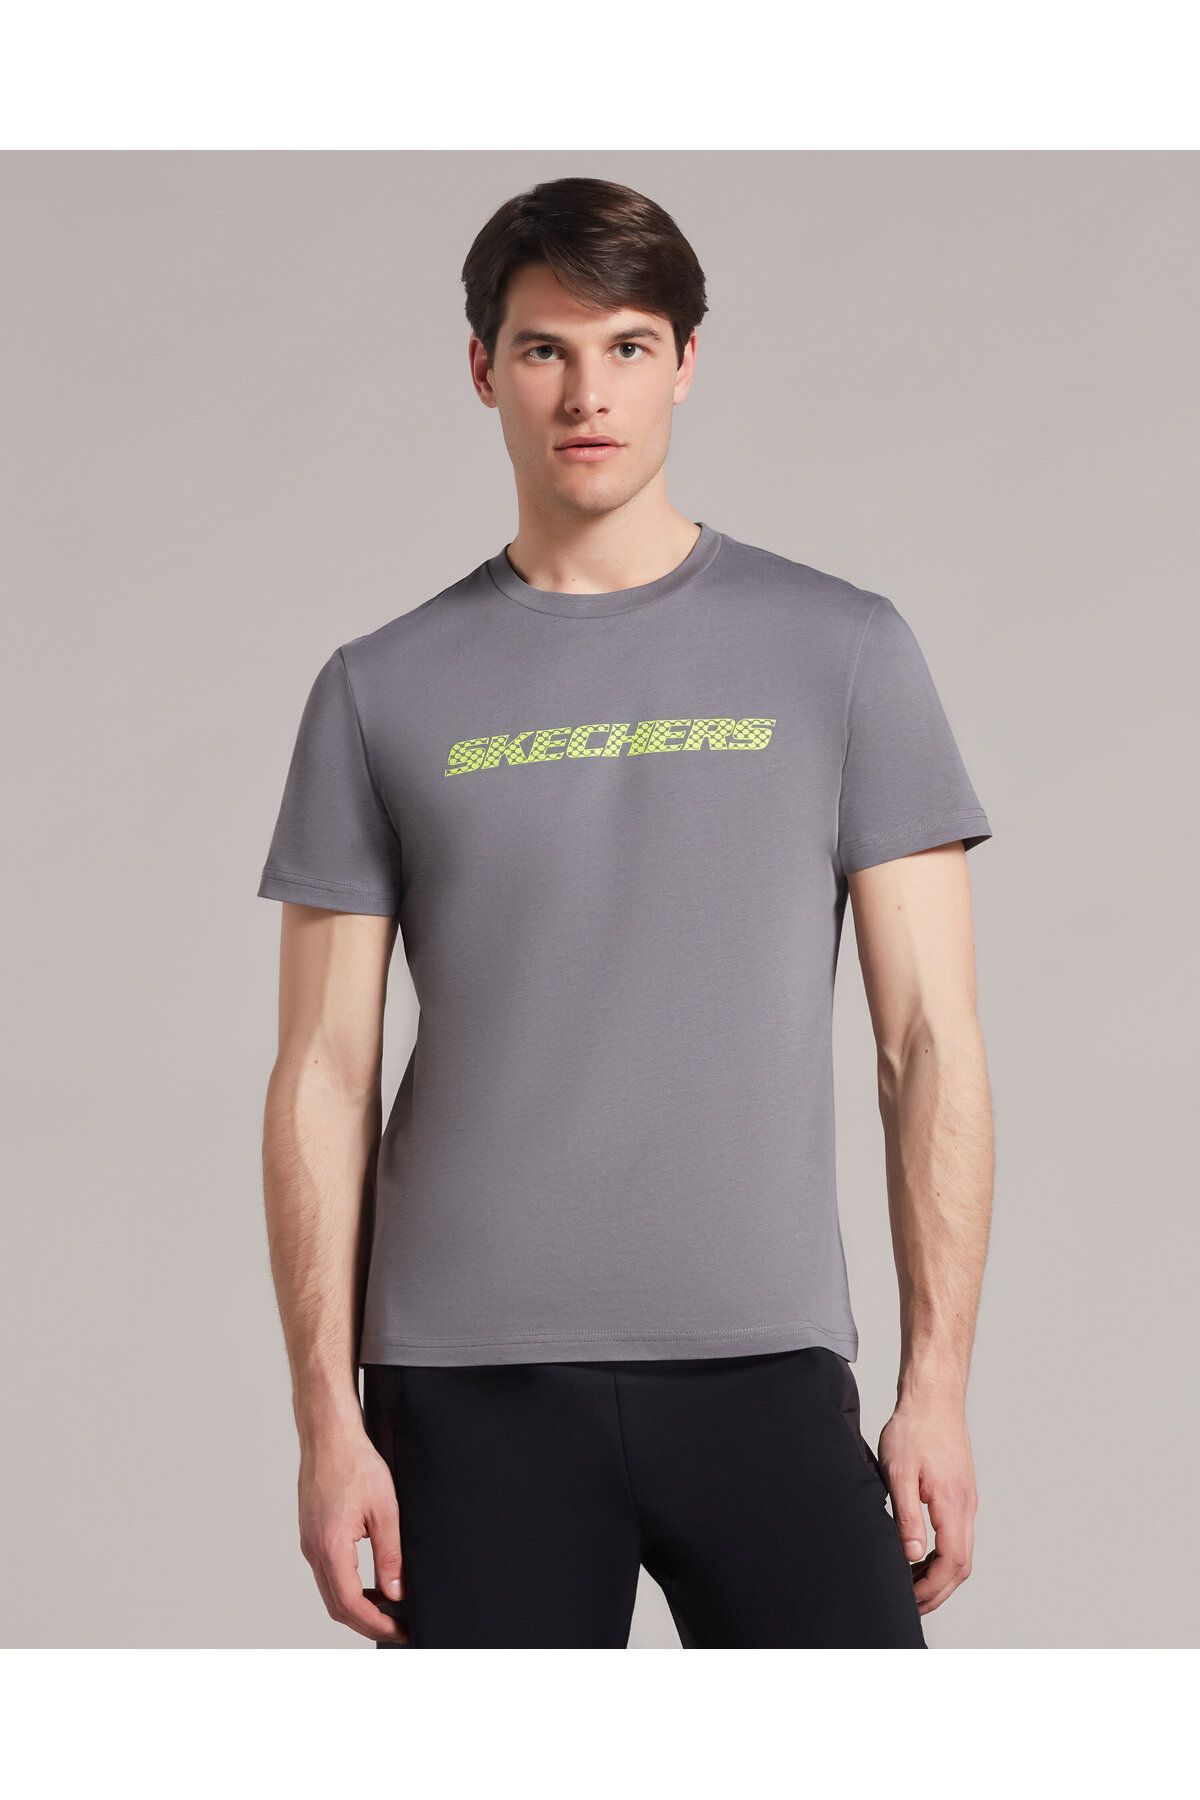 Skechers M Graphic Tee Big Logo T-shirt Erkek Gri Tshirt S212960-003